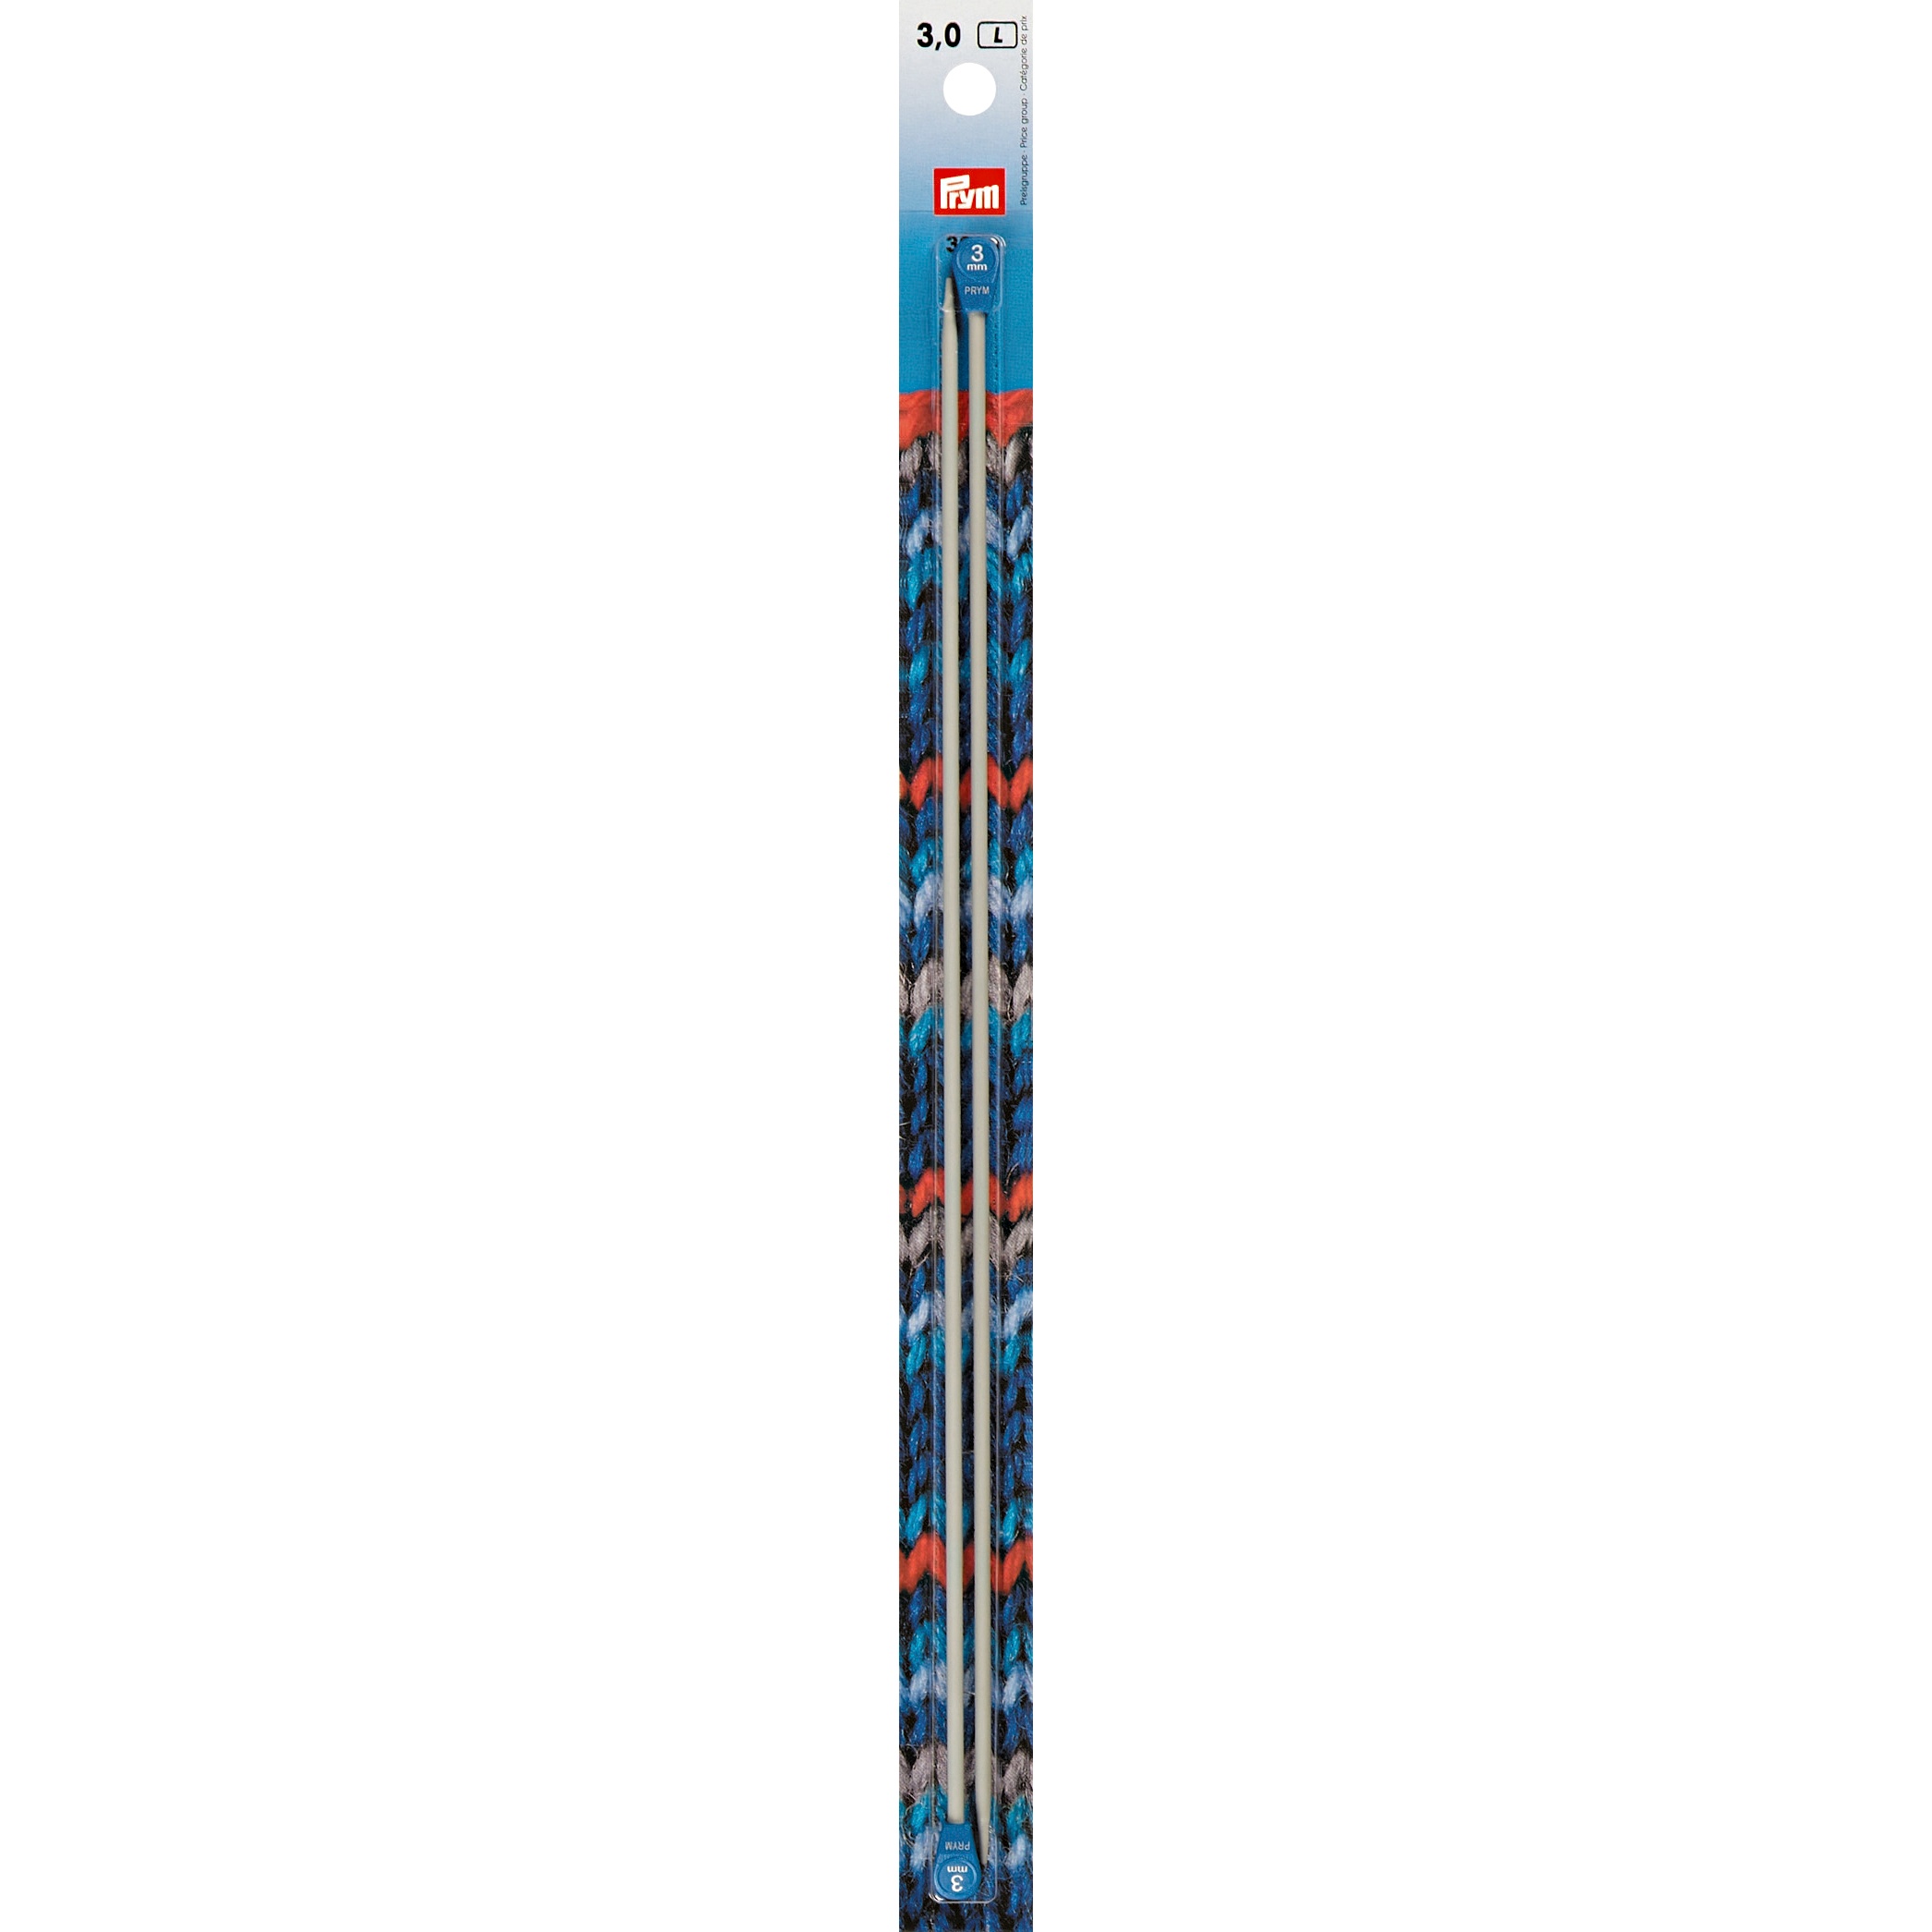 Knitting Needles - 3mm Straight 30cm Long by Prym 191 452